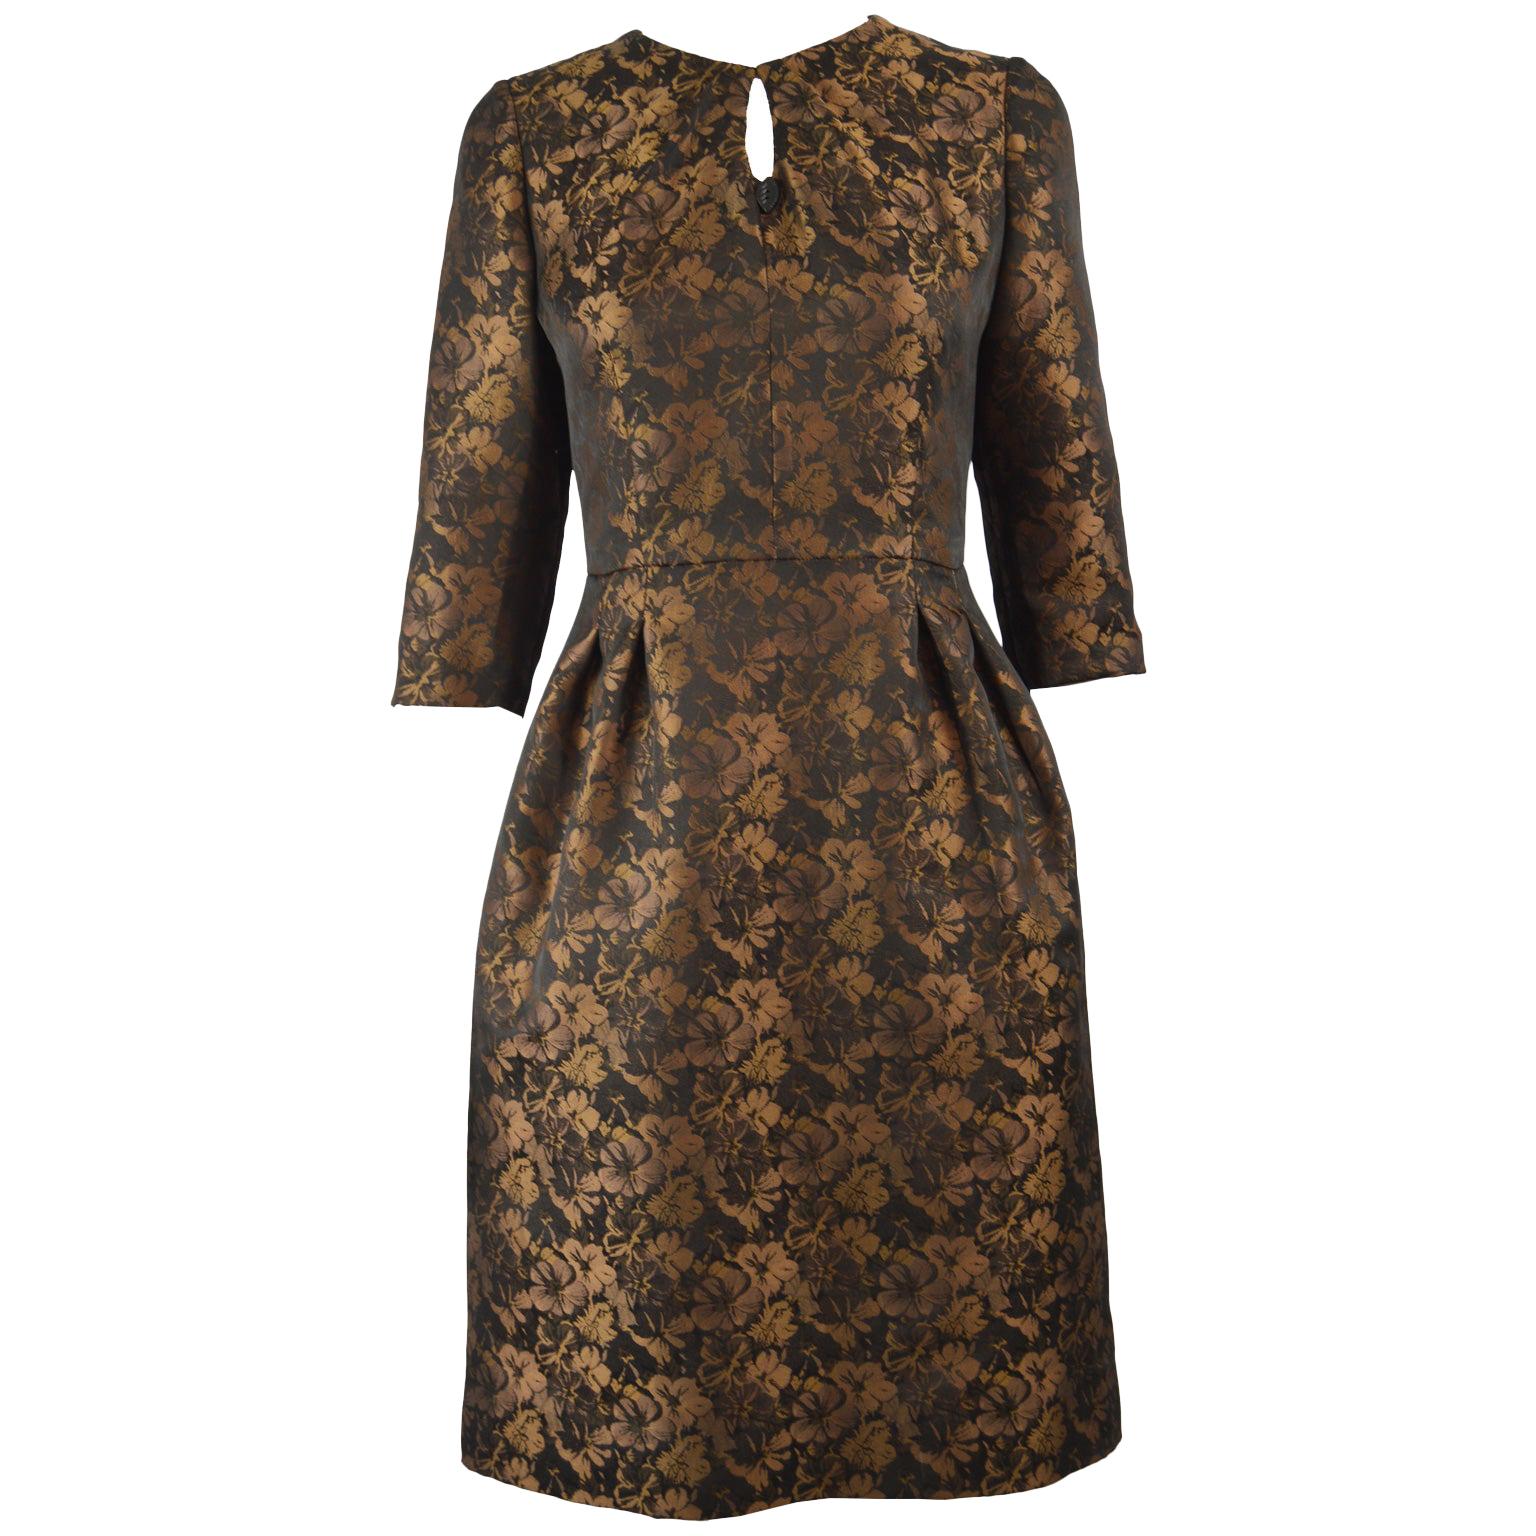 Raffaella Curiel Couture Black & Bronze Floral Jacquard Evening Dress, 1980s